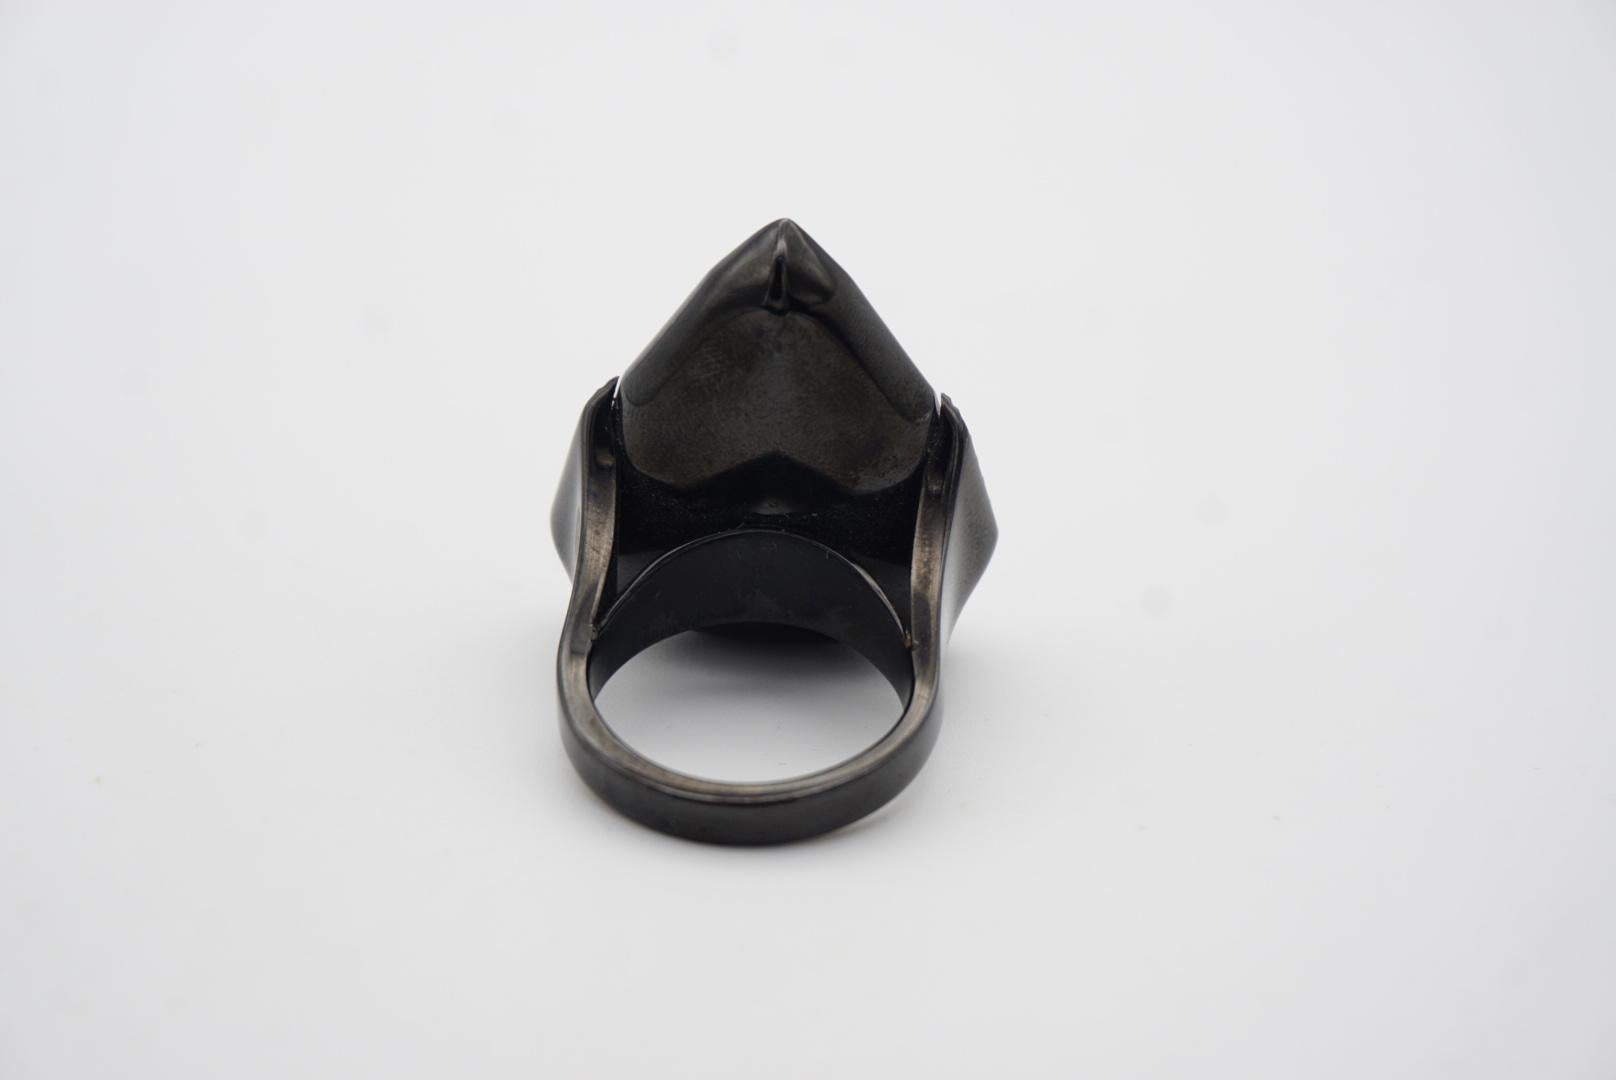 Swarovski Nirvana Triangle Crystals Black Curiosa Cocktail Ring, Size 55, UK N 3